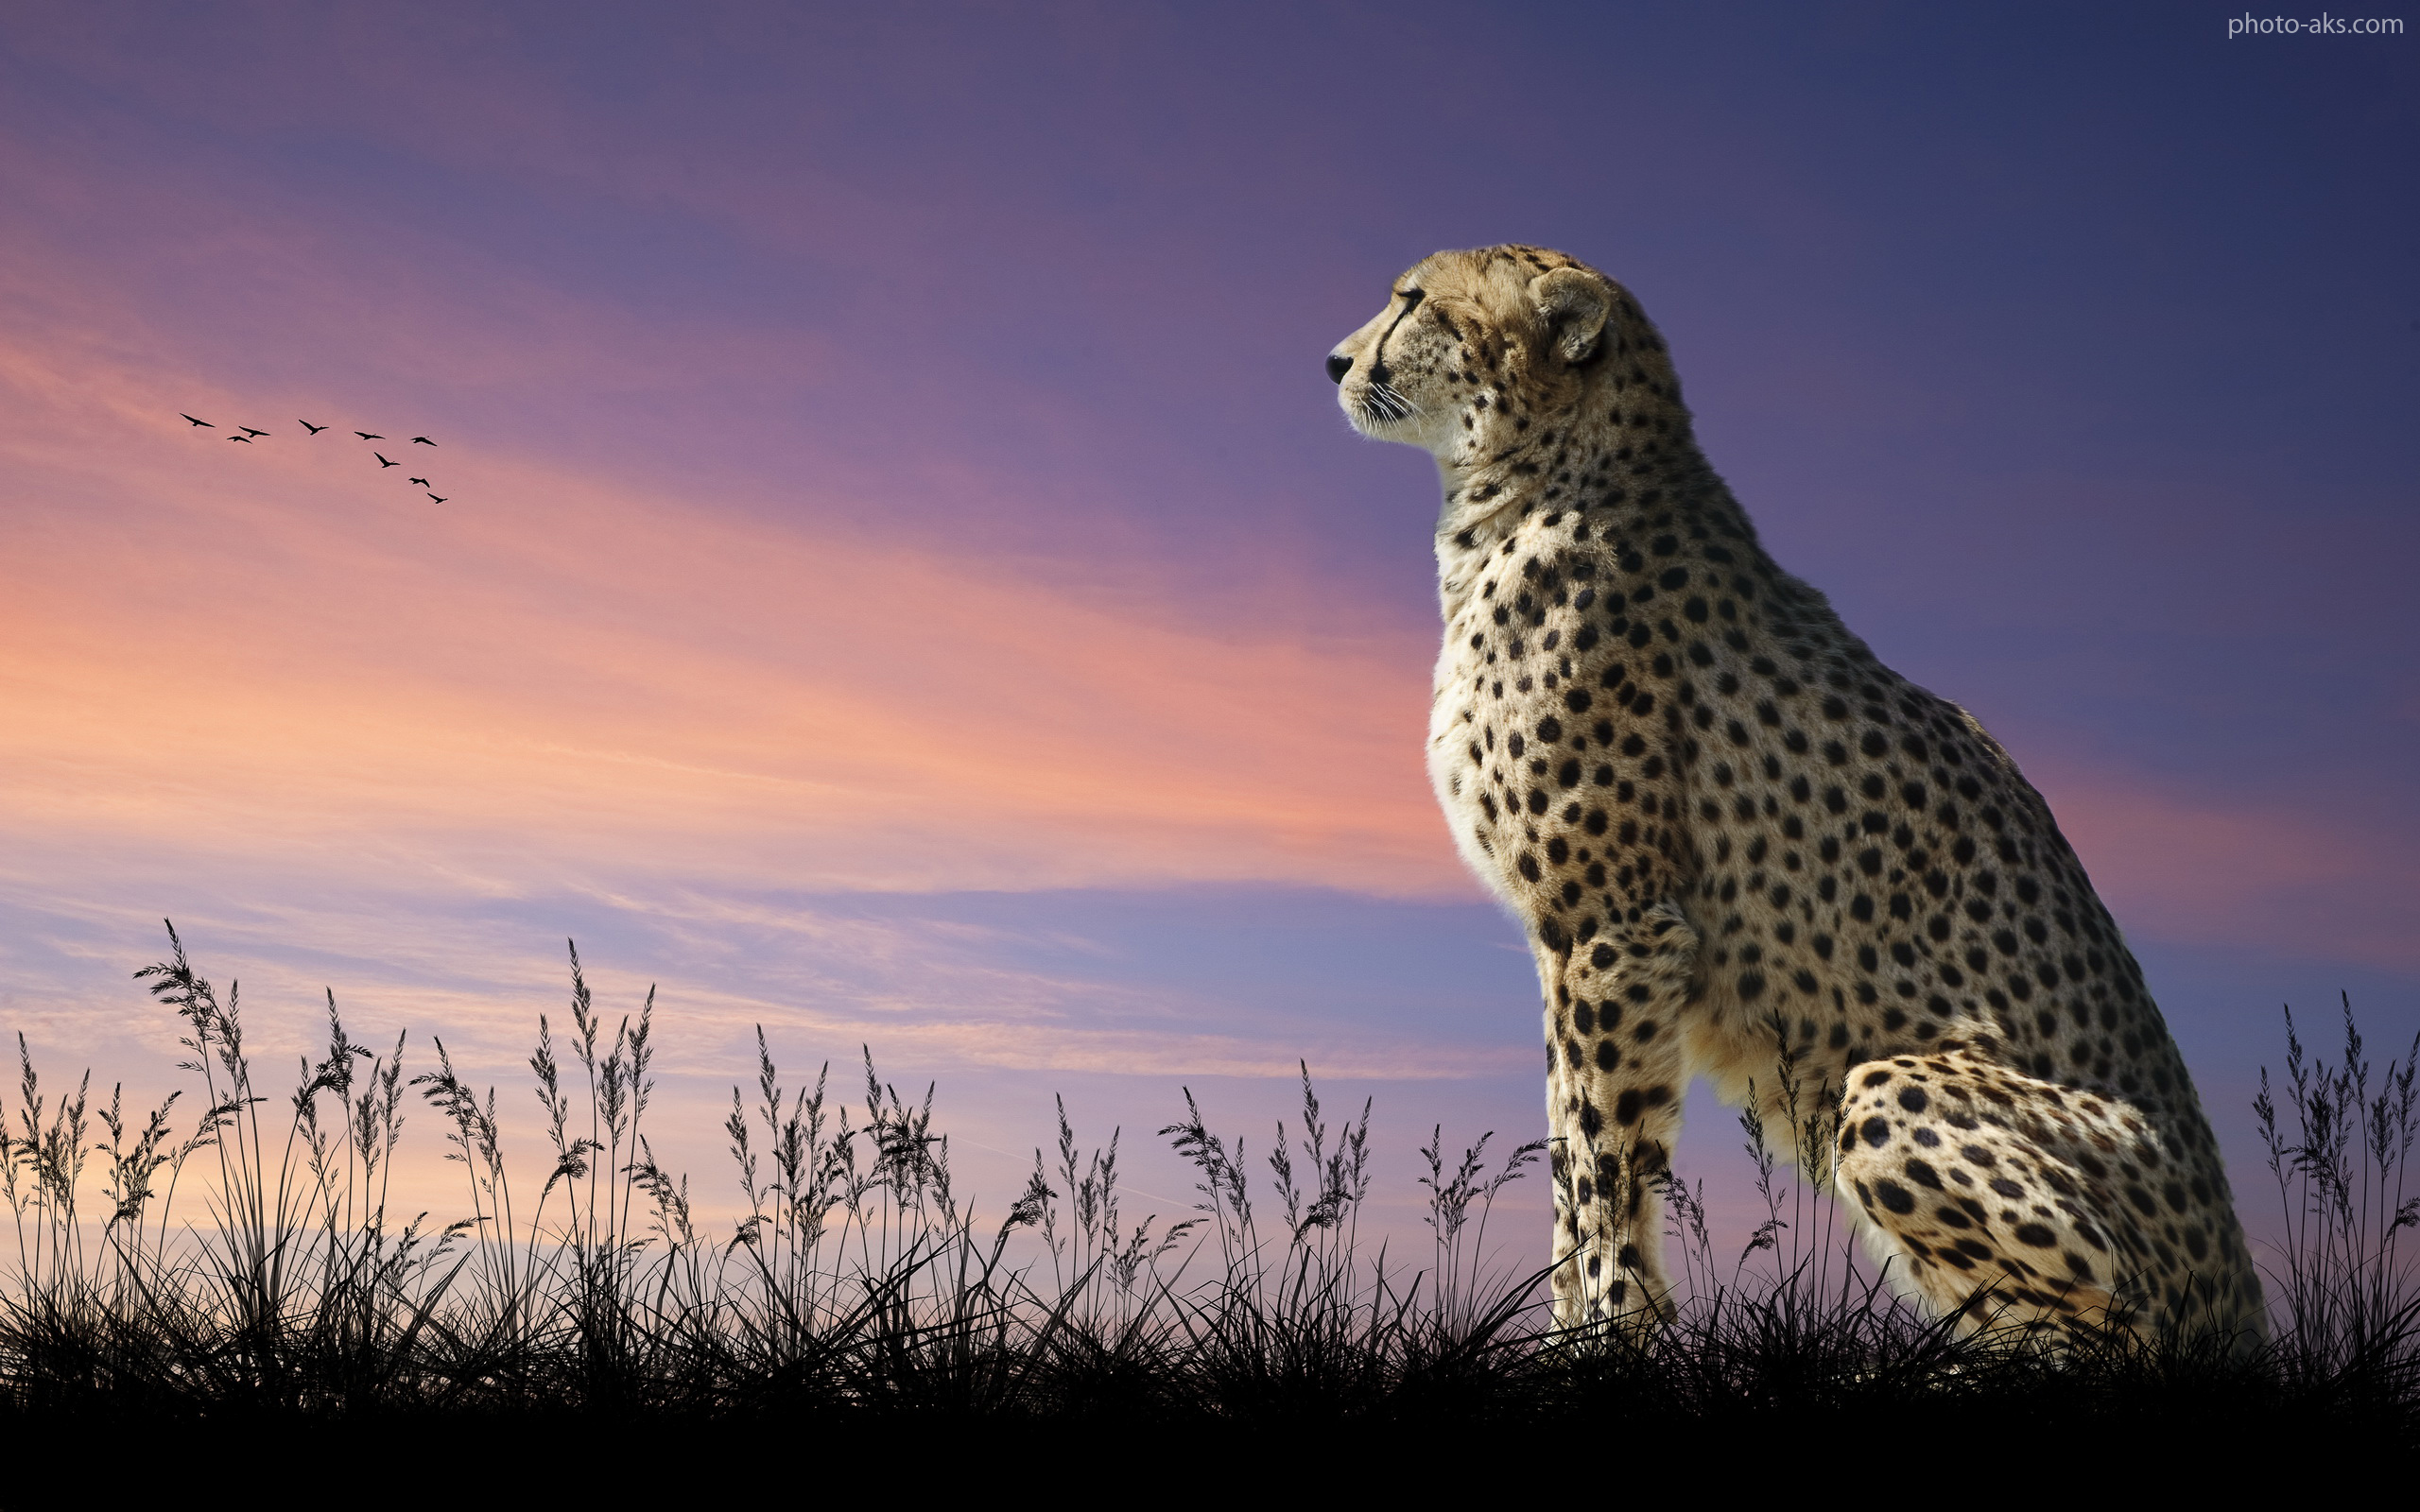 http://pic.photo-aks.com/photo/animals/cat/panther/large/cheetah-animal-wallpaper.jpg